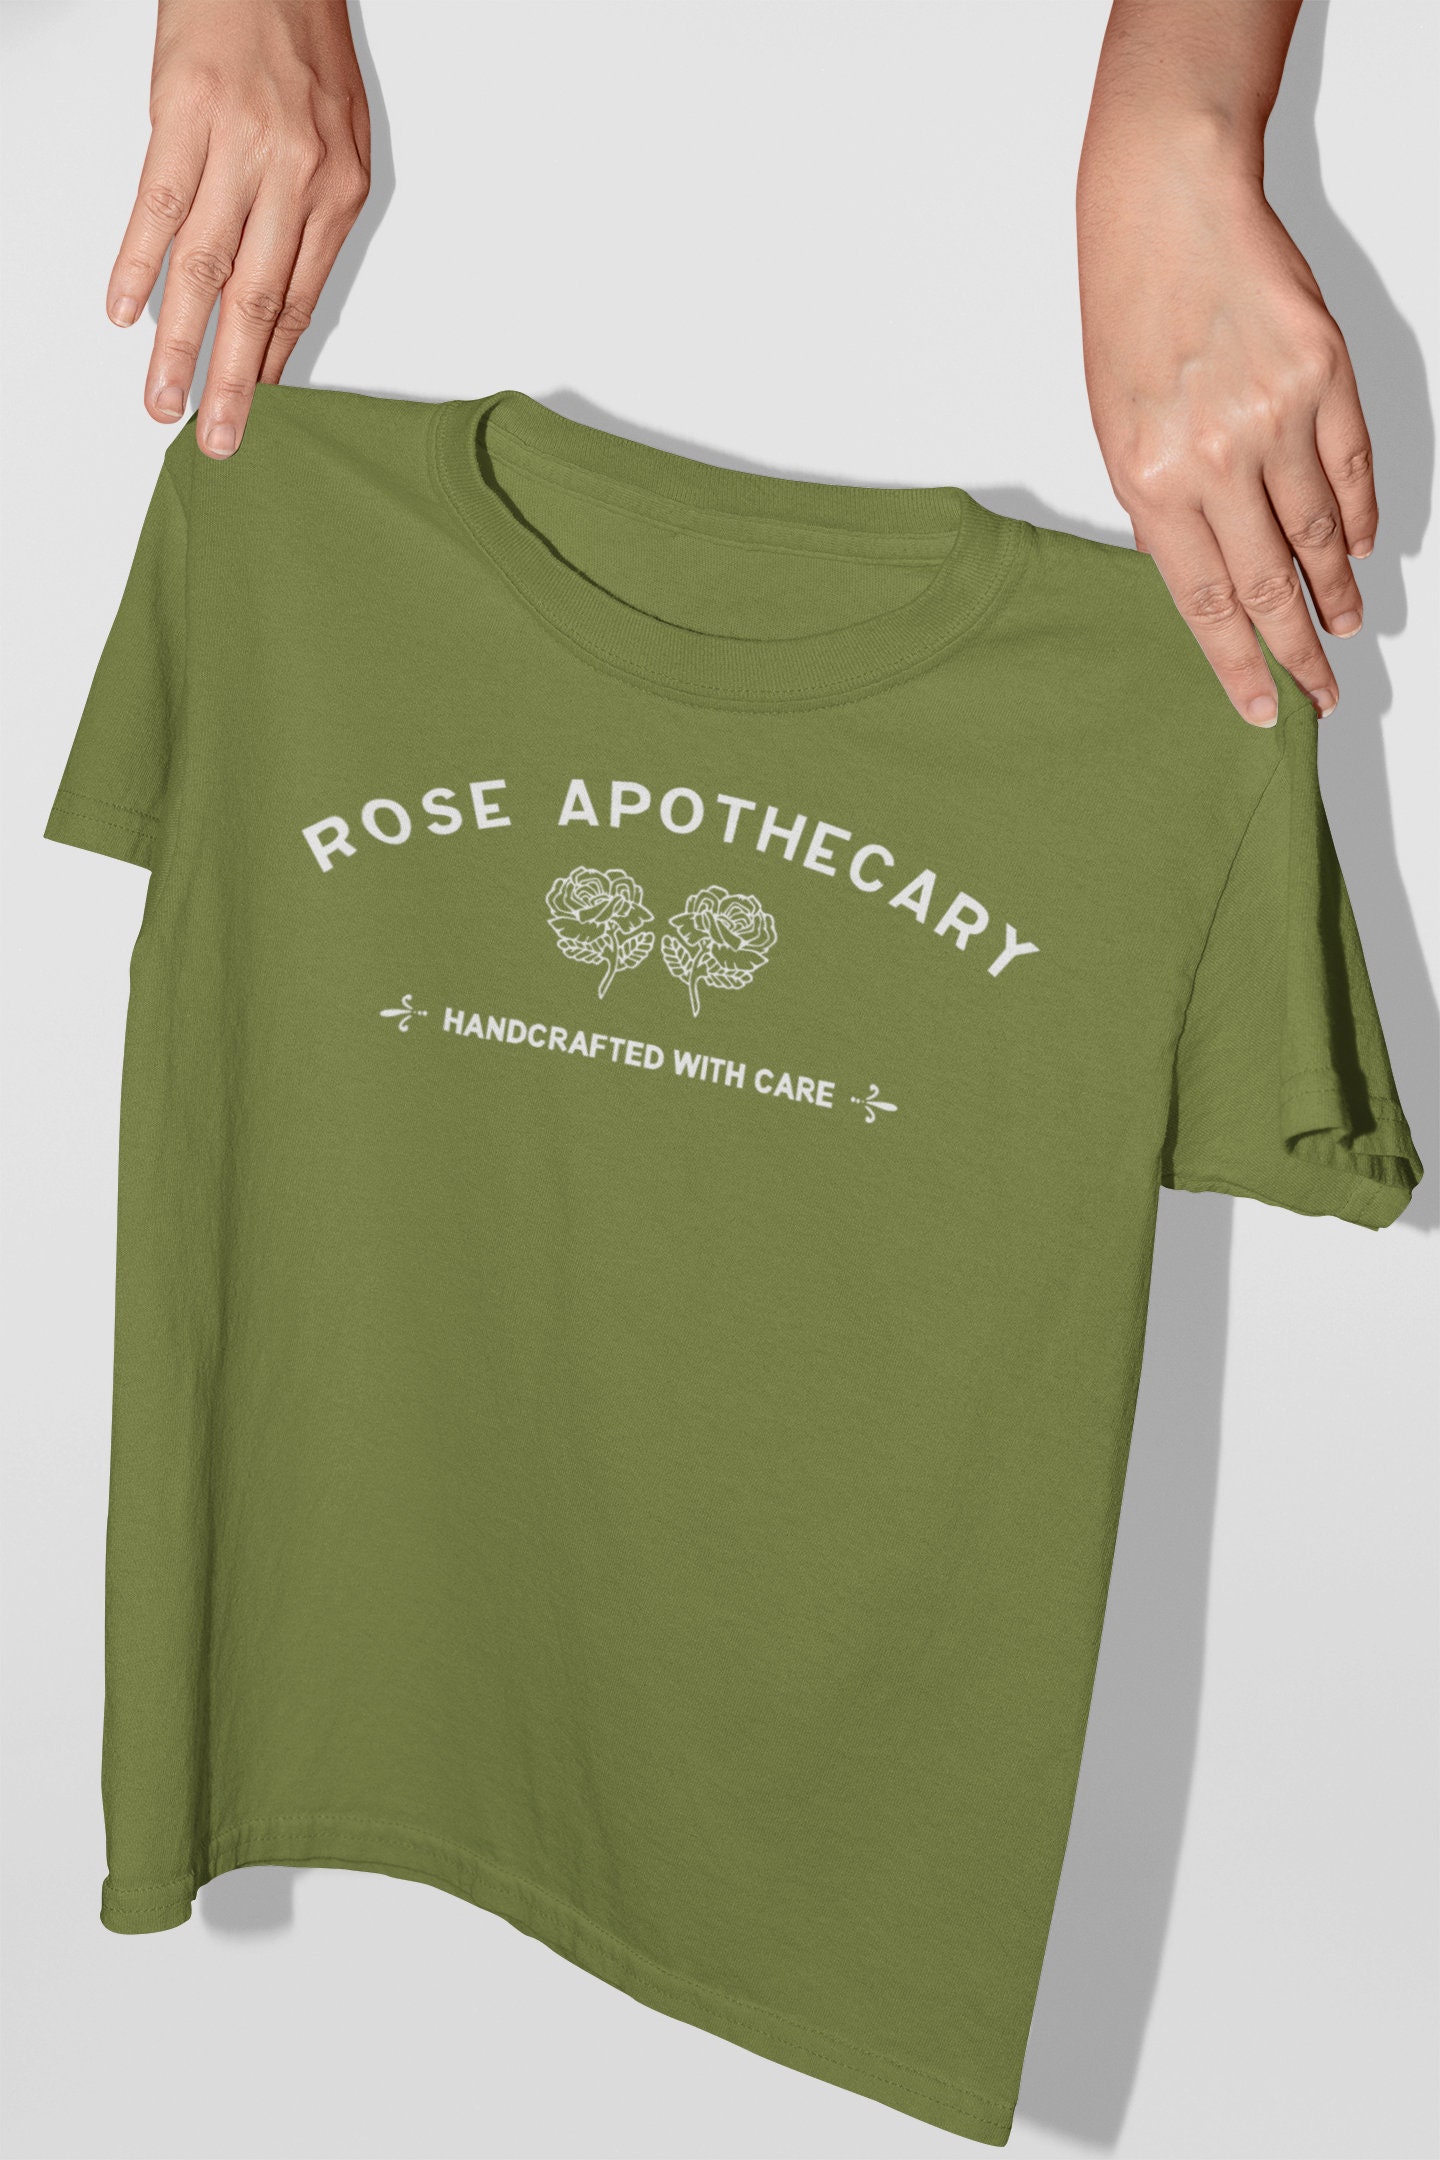 Rose Apothecary Tshirt Alexis Rose Tshirt Schiits Creek | Etsy